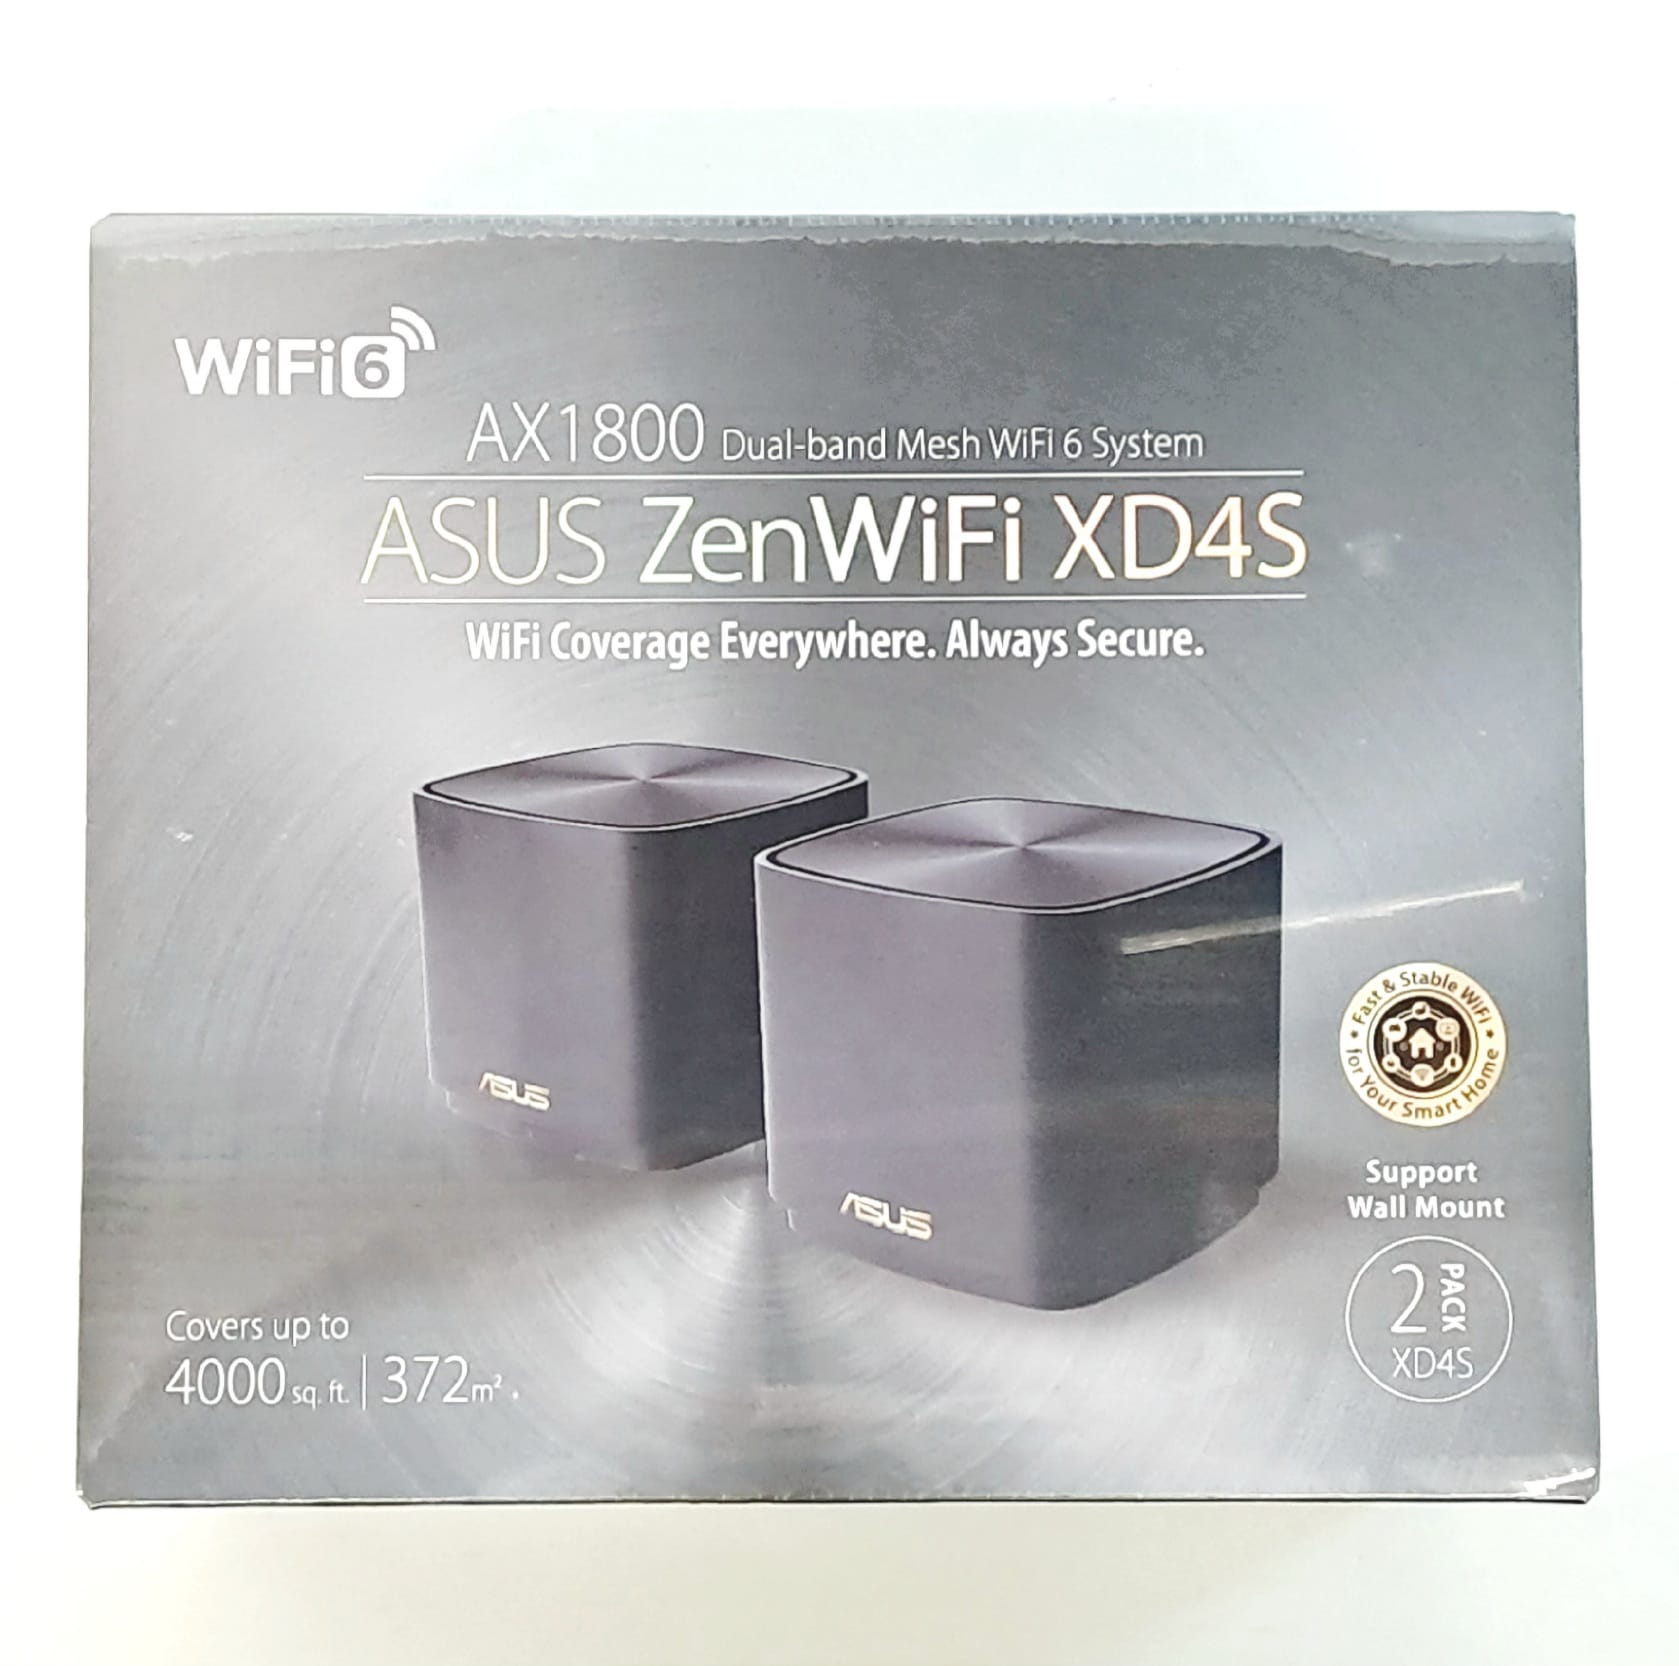 ASUS ZenWiFi XD4S AX1800 Dual-band Mesh WiFi 6 System (2-pk)